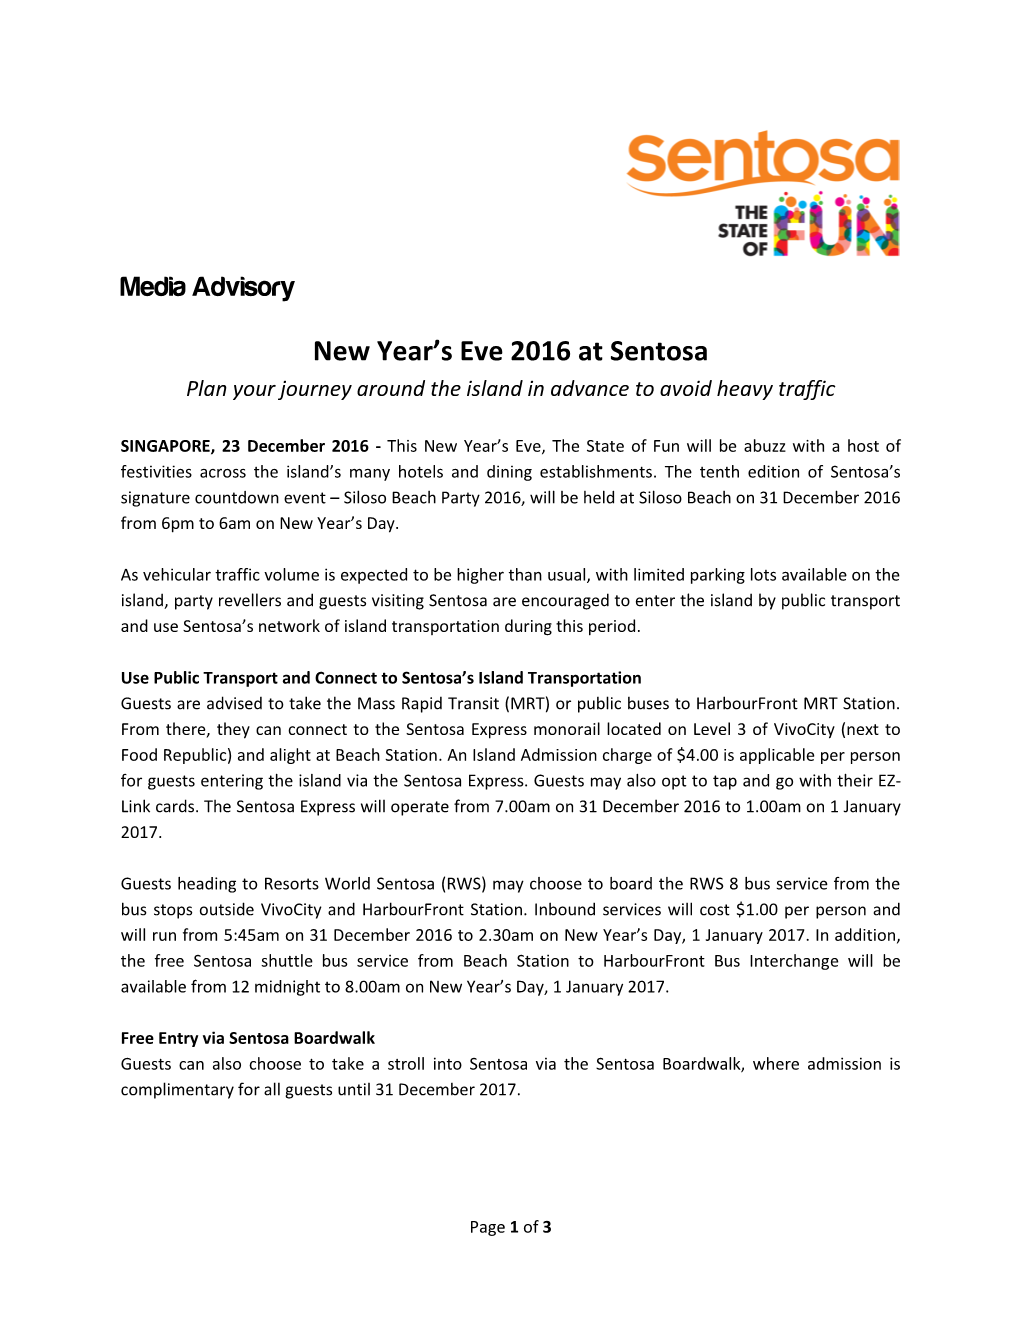 NEWS New Year's Eve 2016 at Sentosa 23 DEC 2016